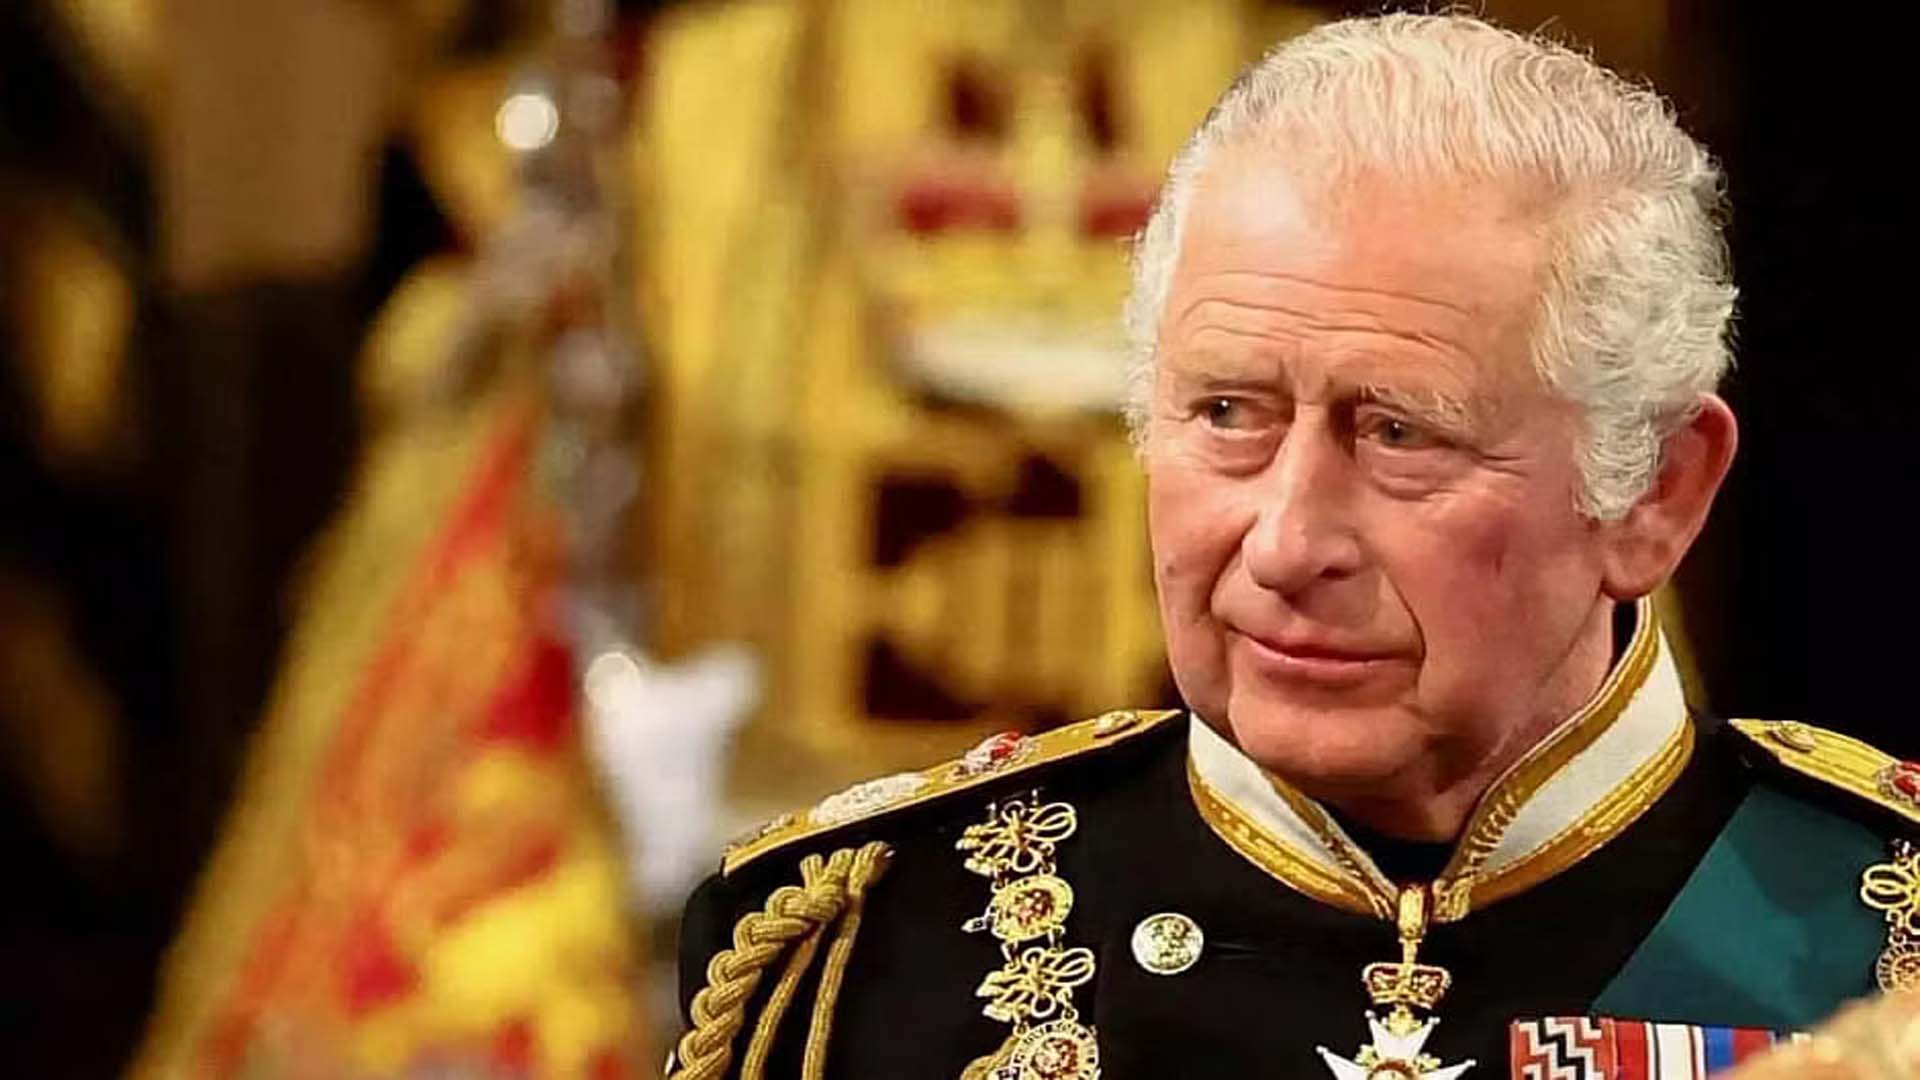 King Charles has cancer: Buckingham Palace